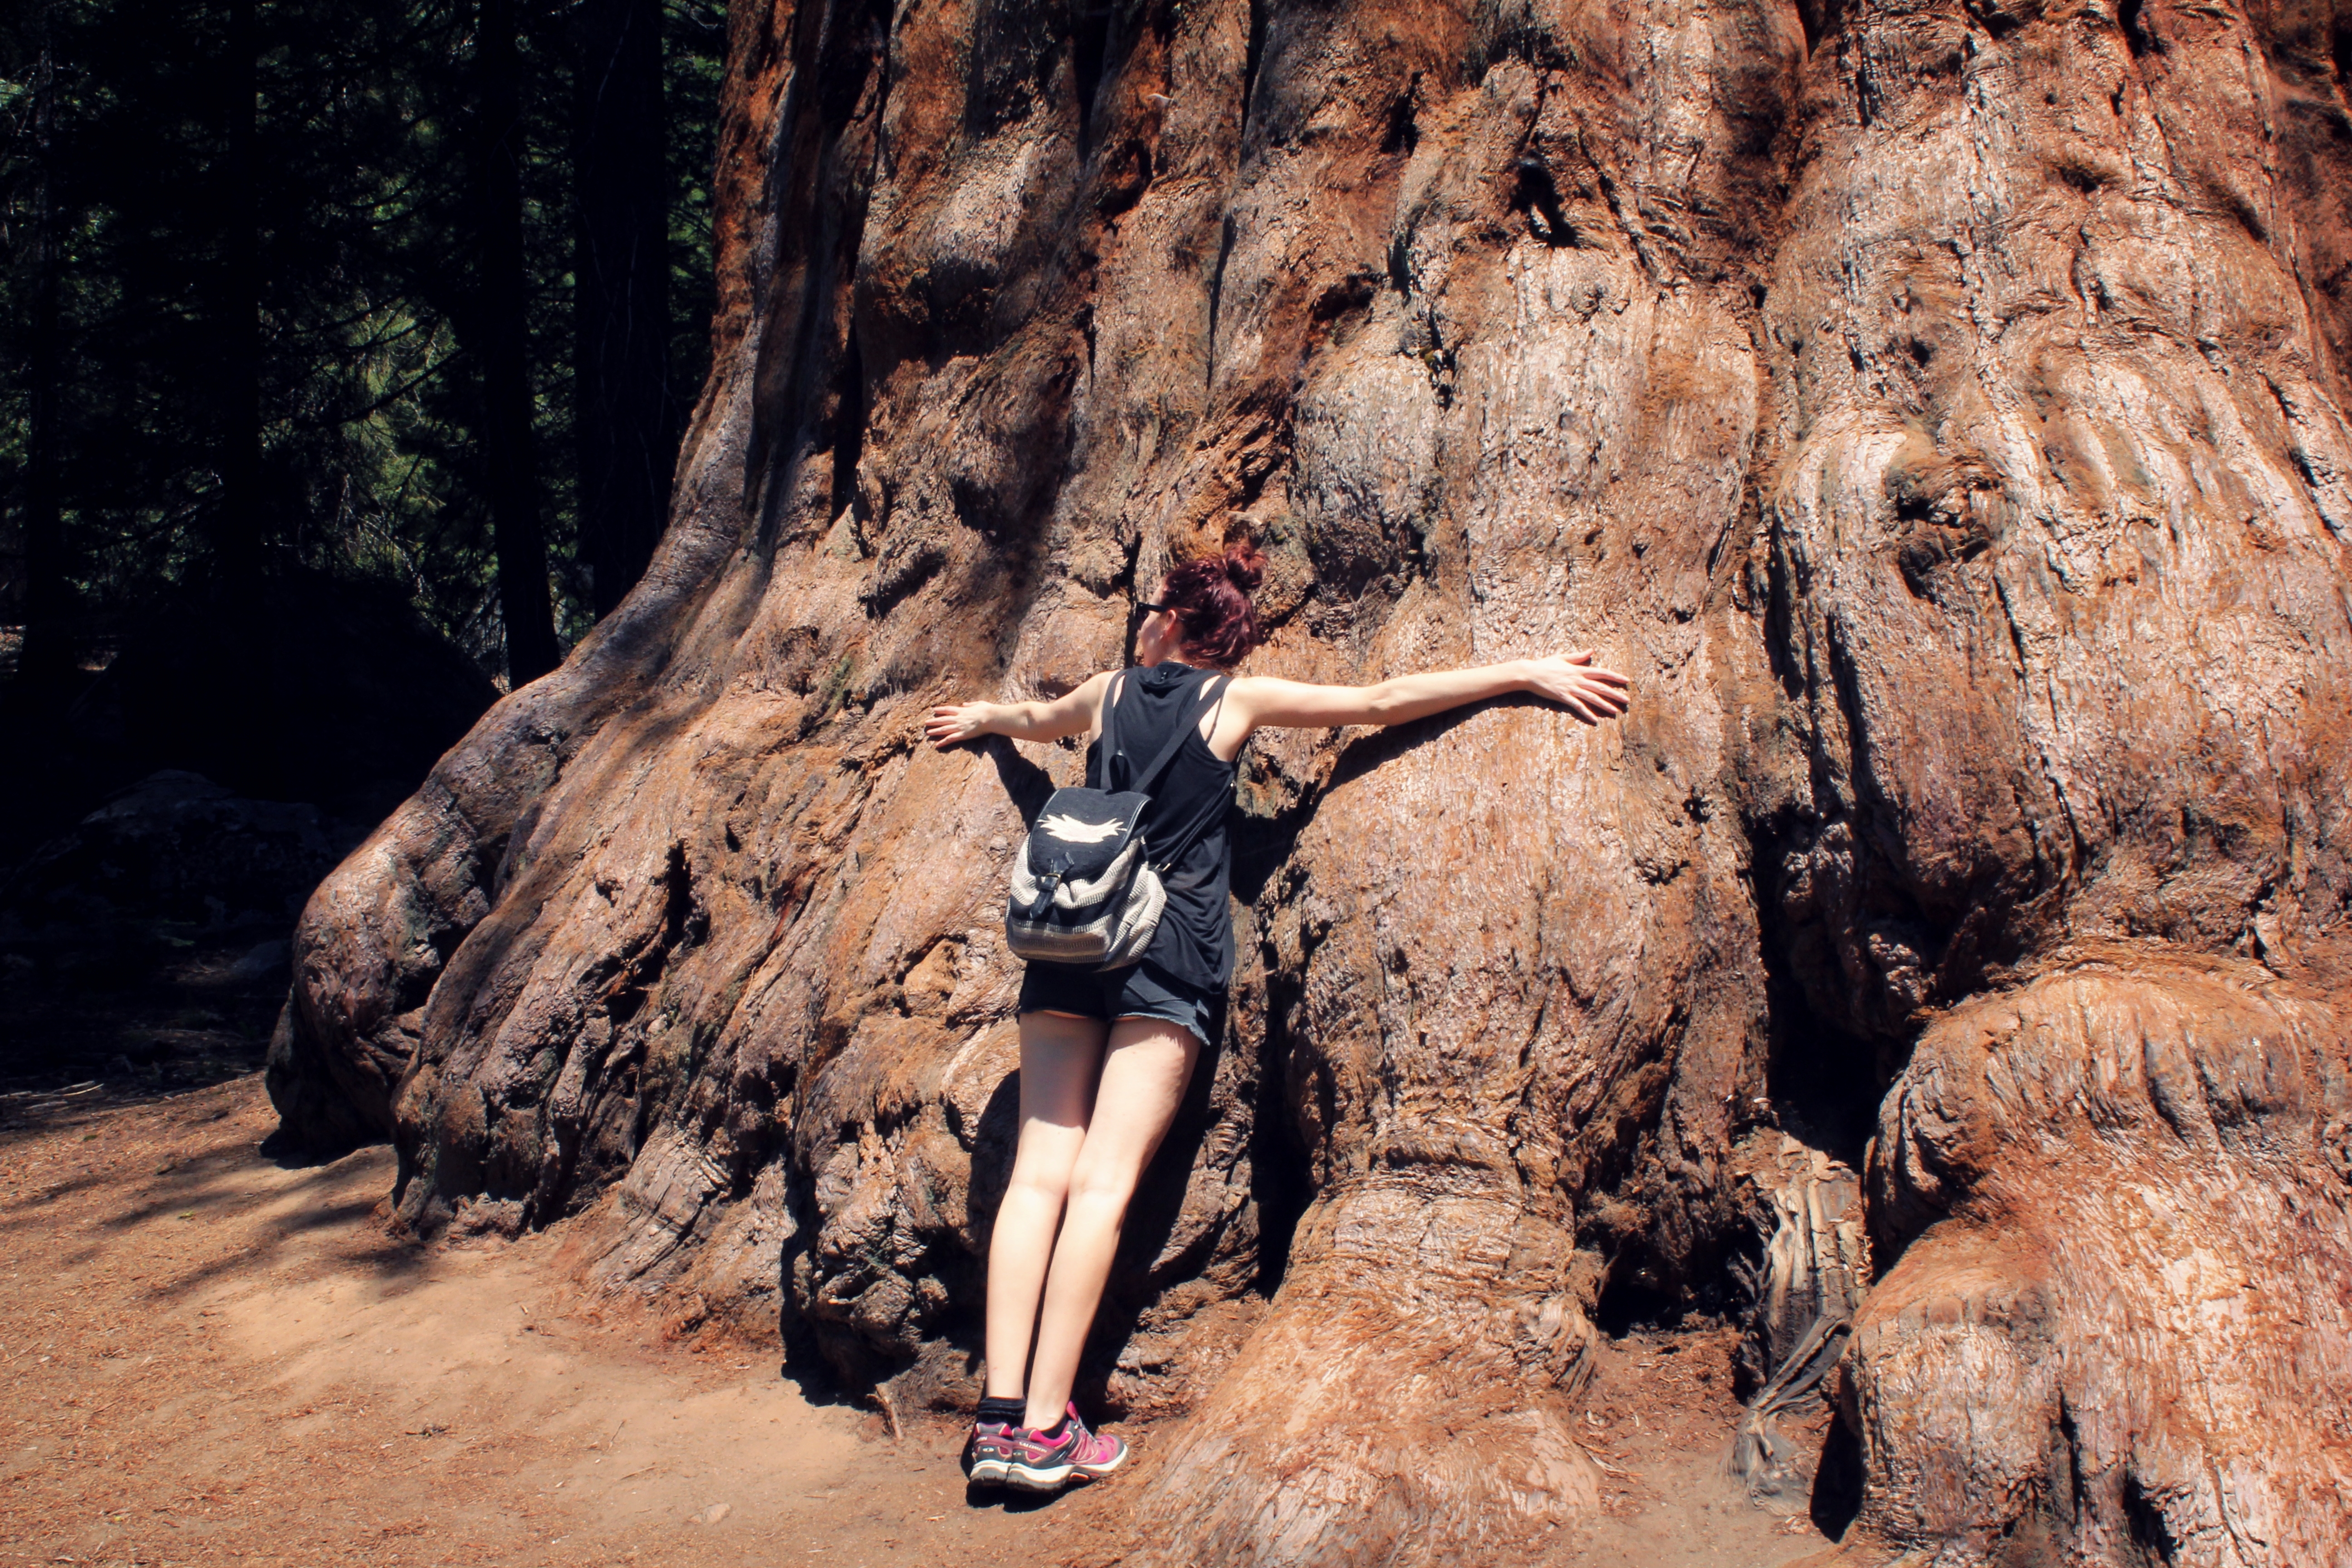 Hugging Giants! in Sequoia National Park, California